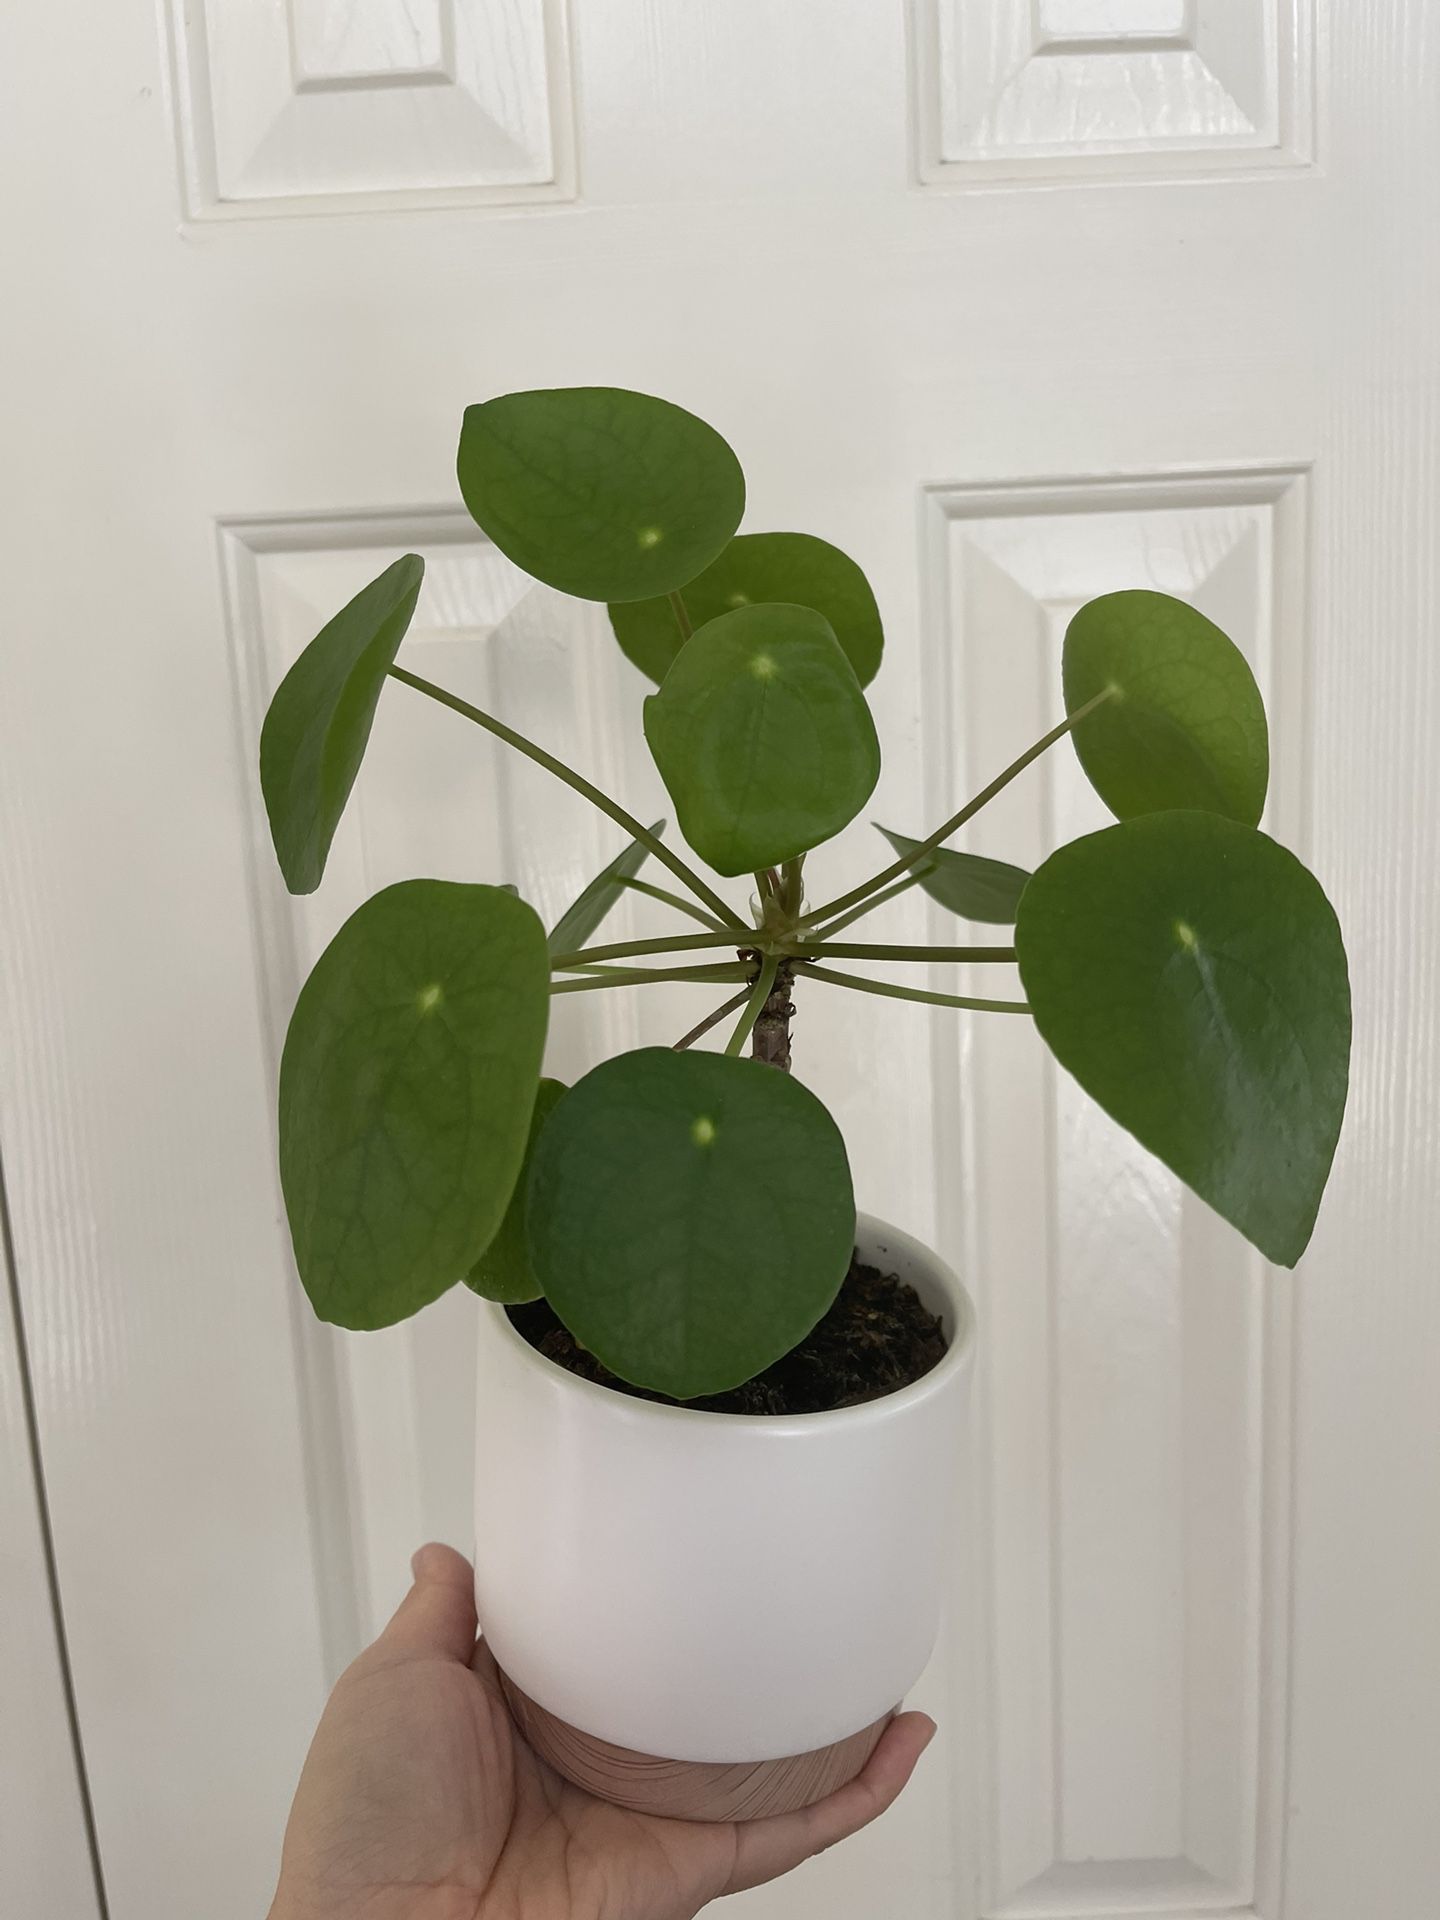 Beautiful Pilea Plant With Pot